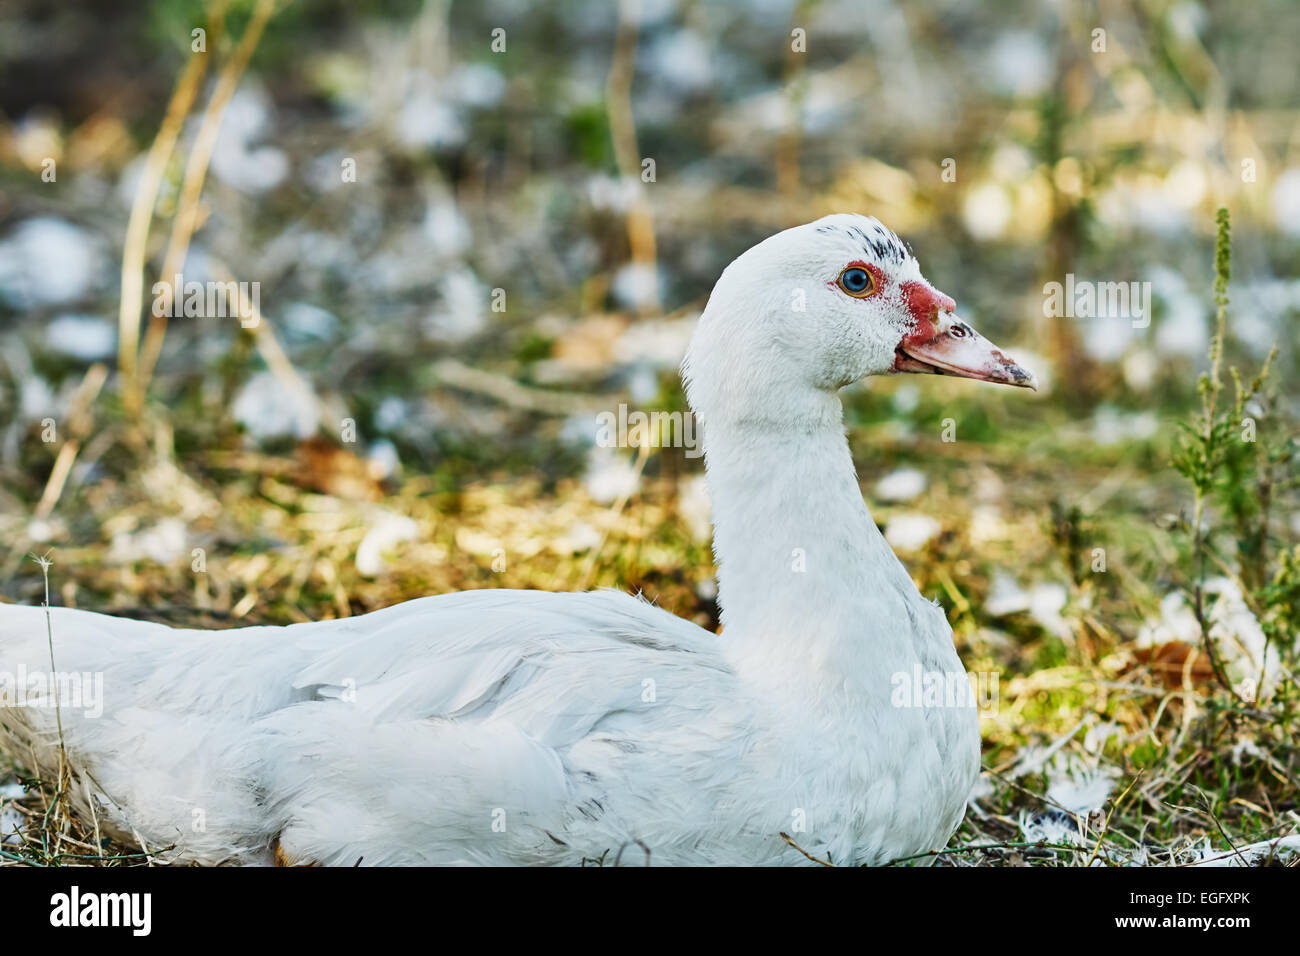 Wonderful white duck in the village street Stock Photo